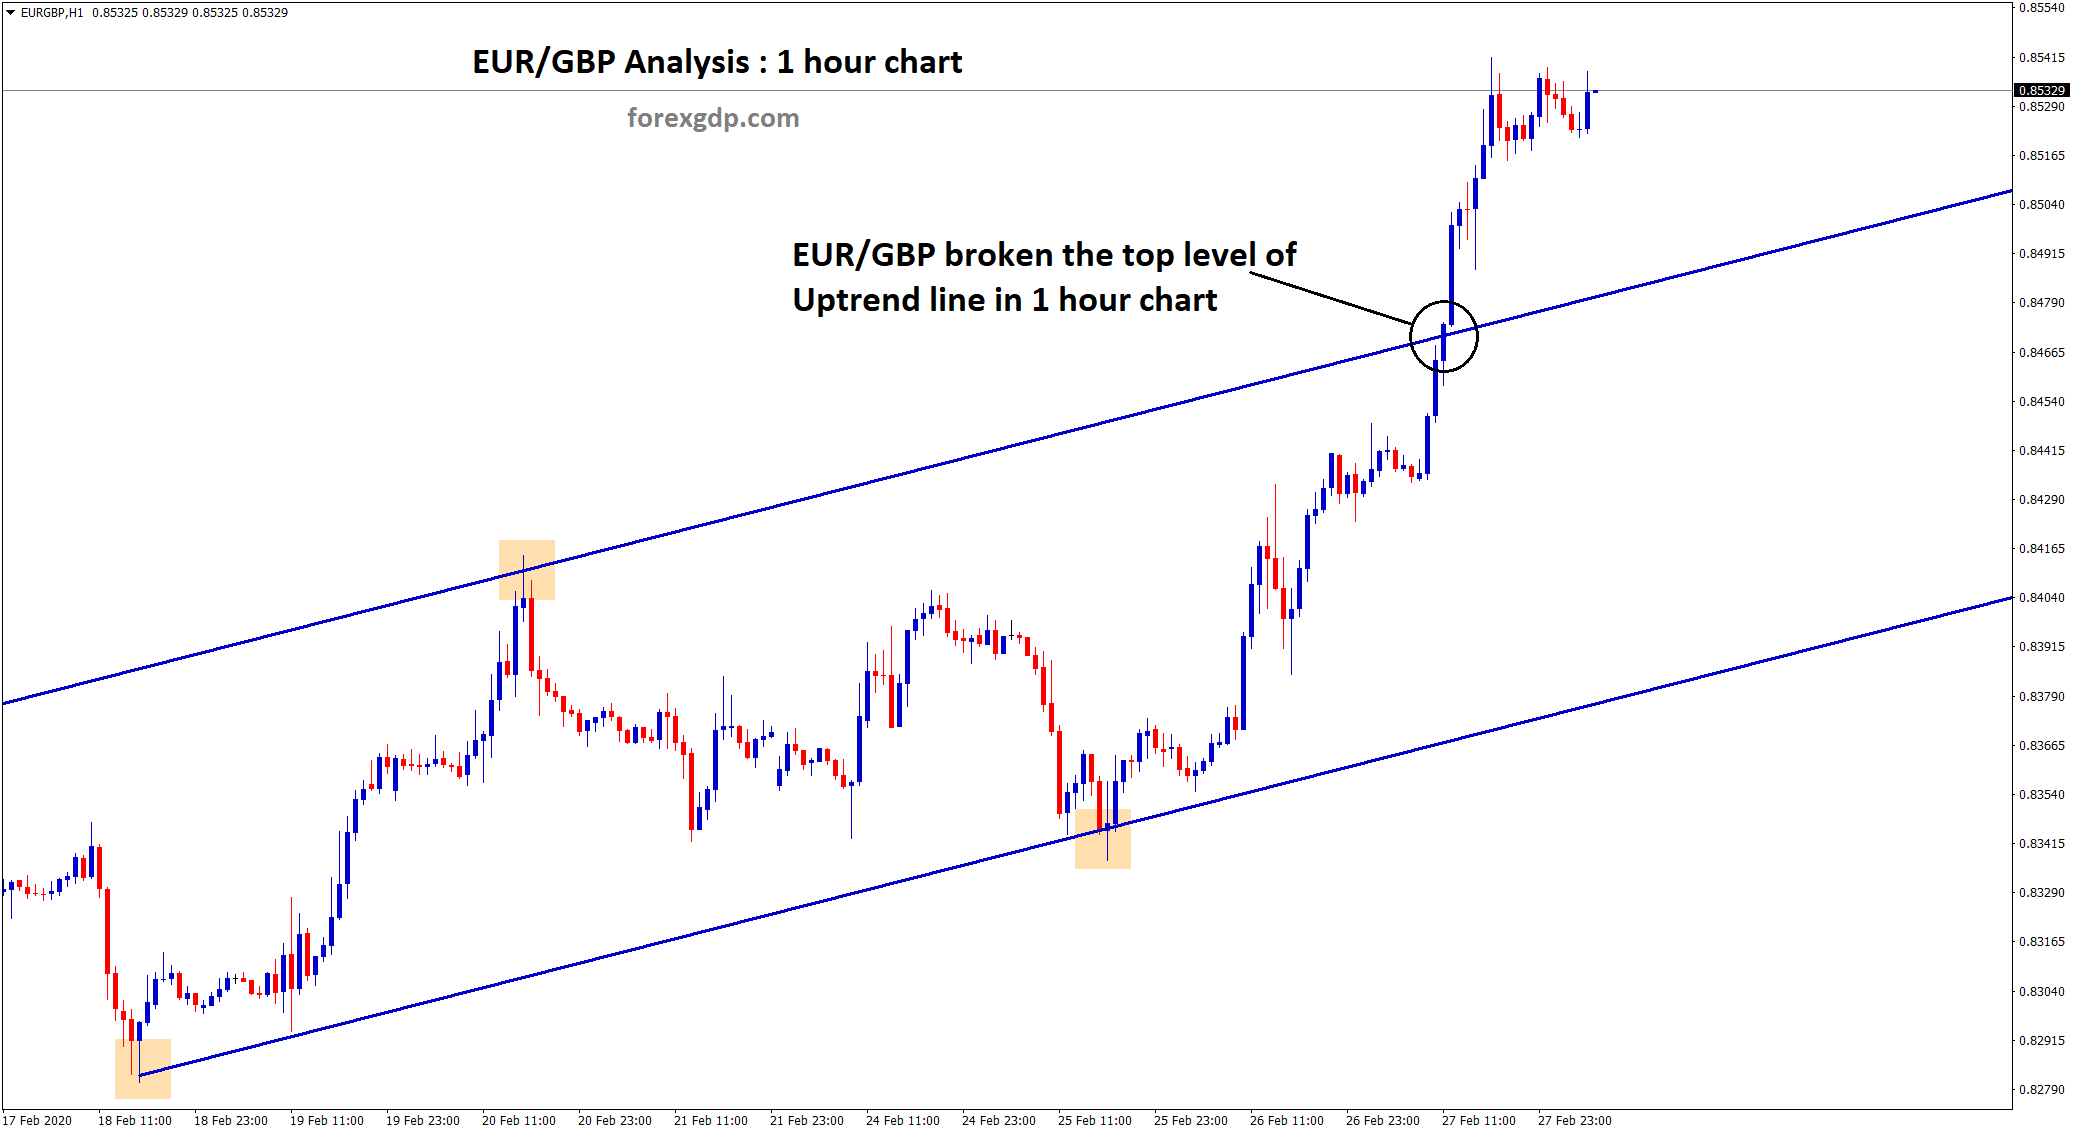 Uptrend line of EUR/GBP breakout